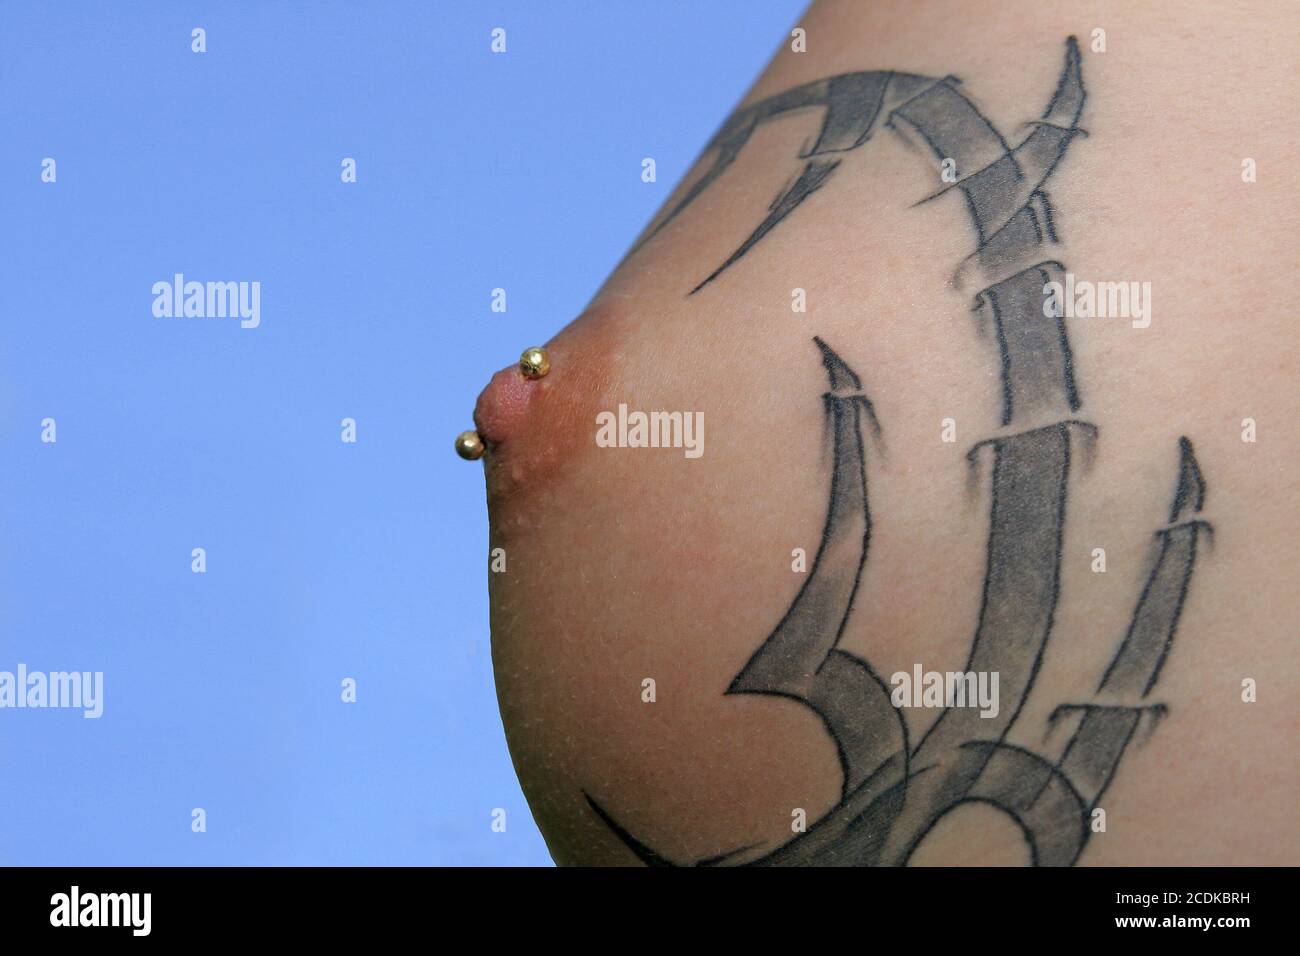 Brust mit tatoo und piercing Stock Photo